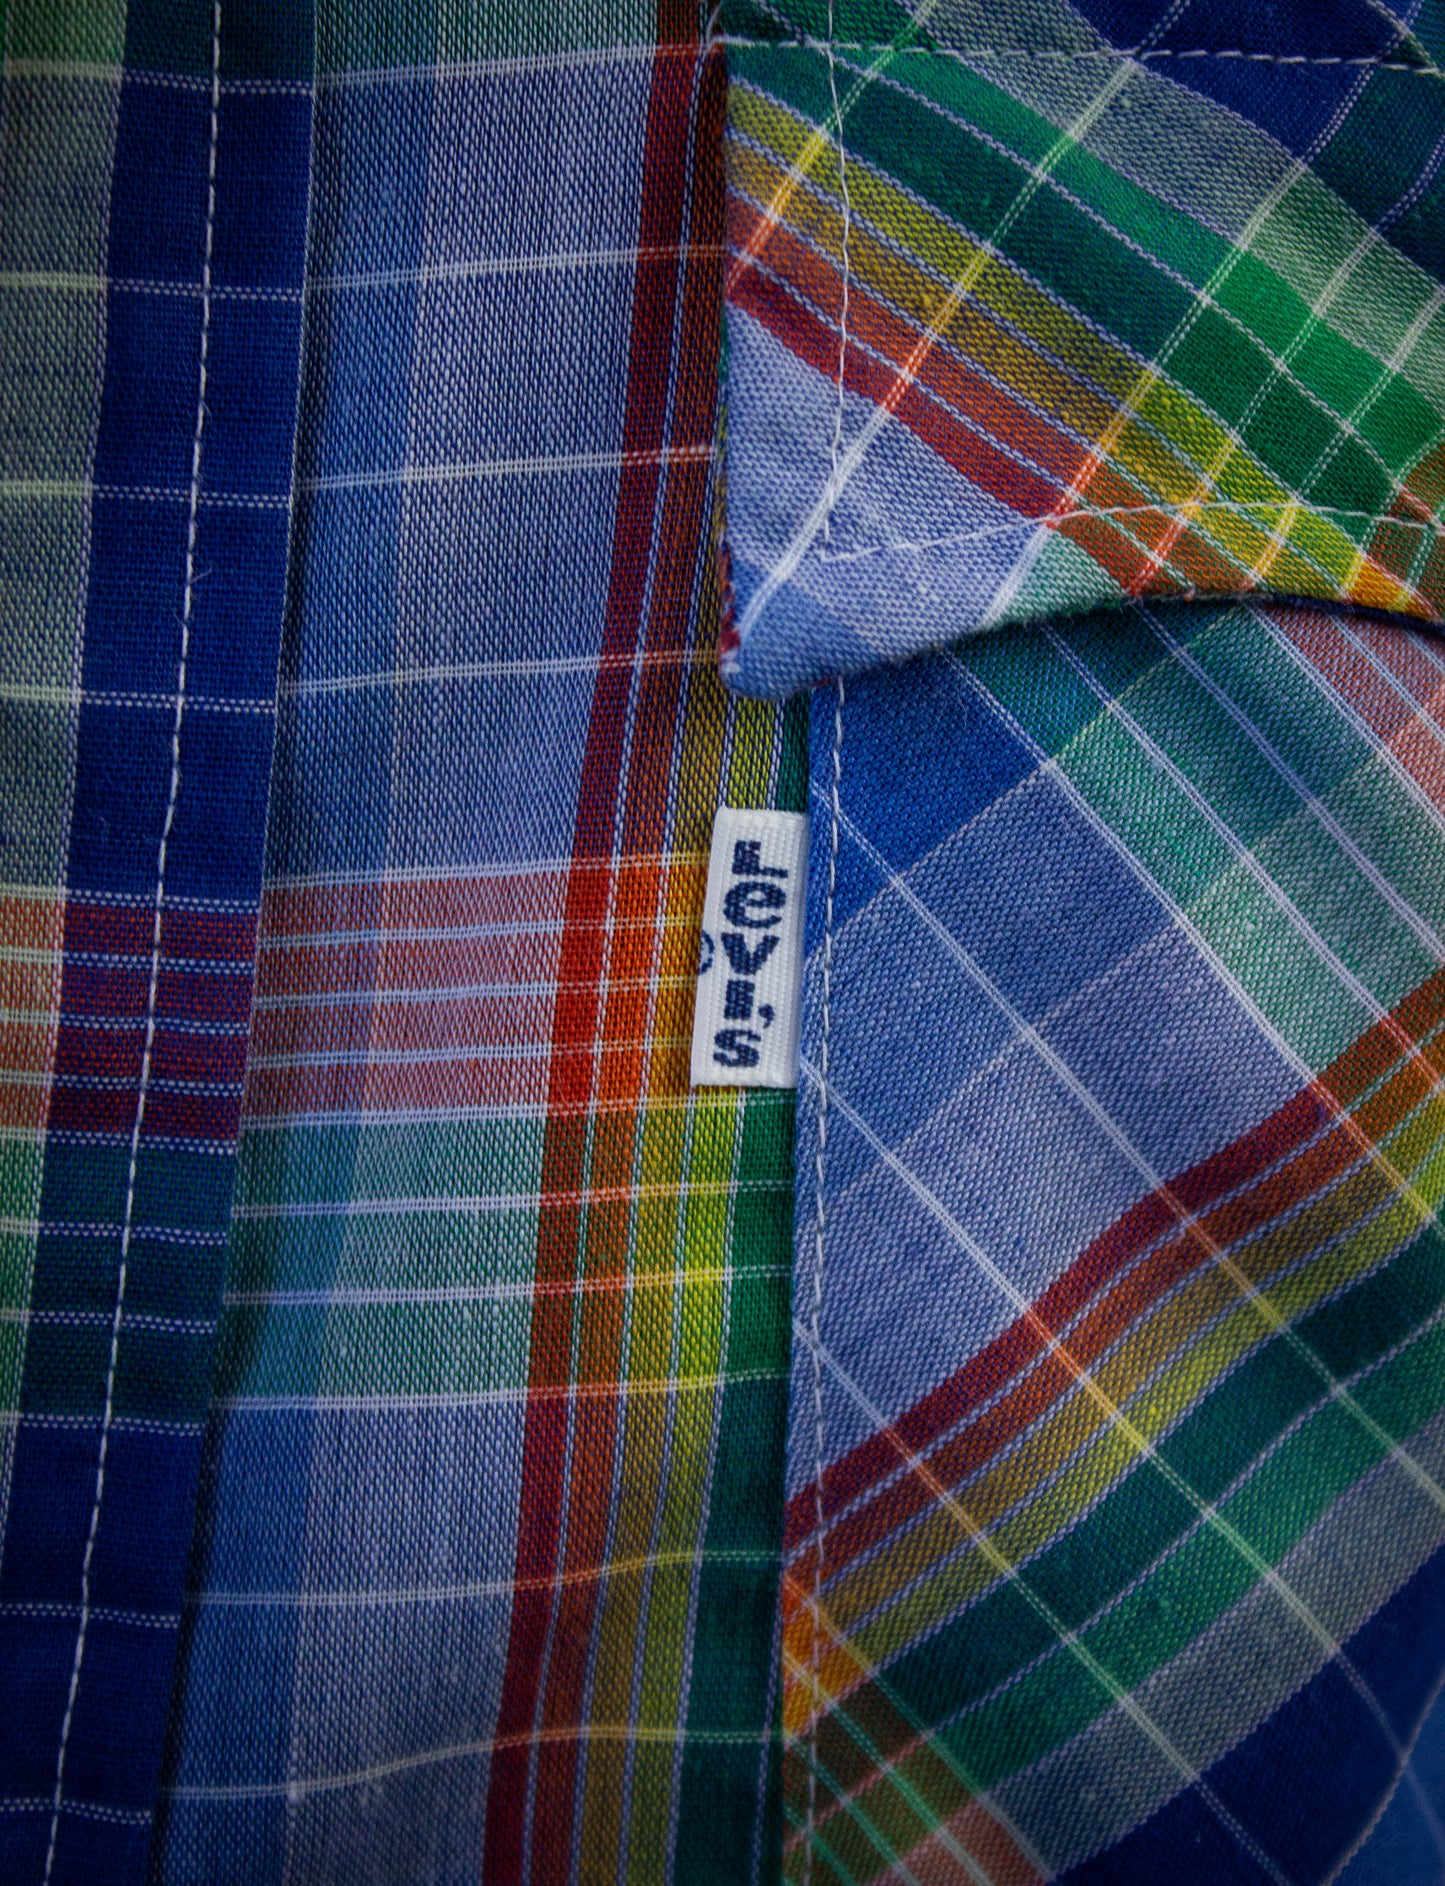 Vintage Levi's Rainbow Plaid Button Up Shirt Medium